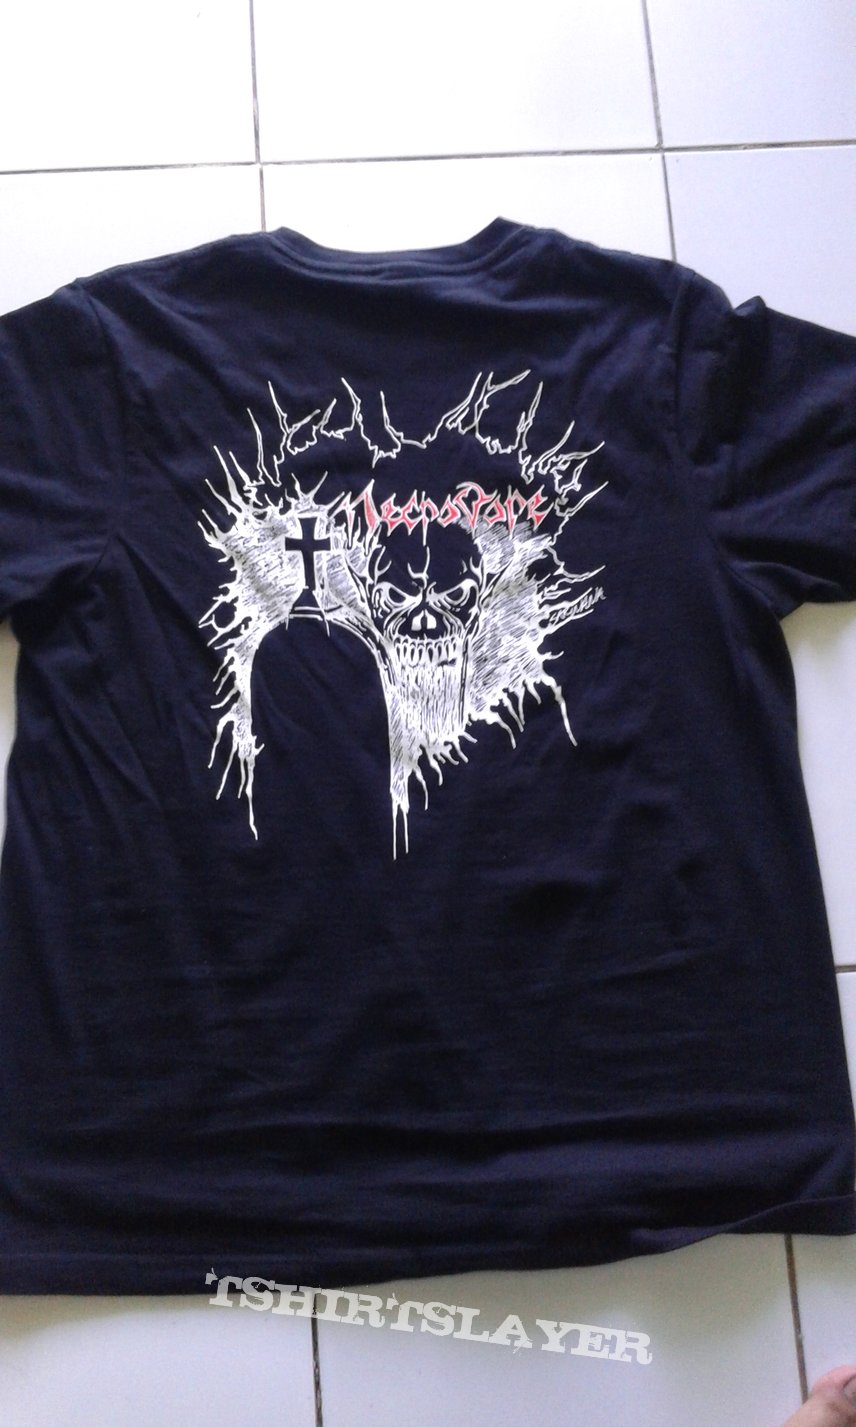 Necrovore - Logo shirt 